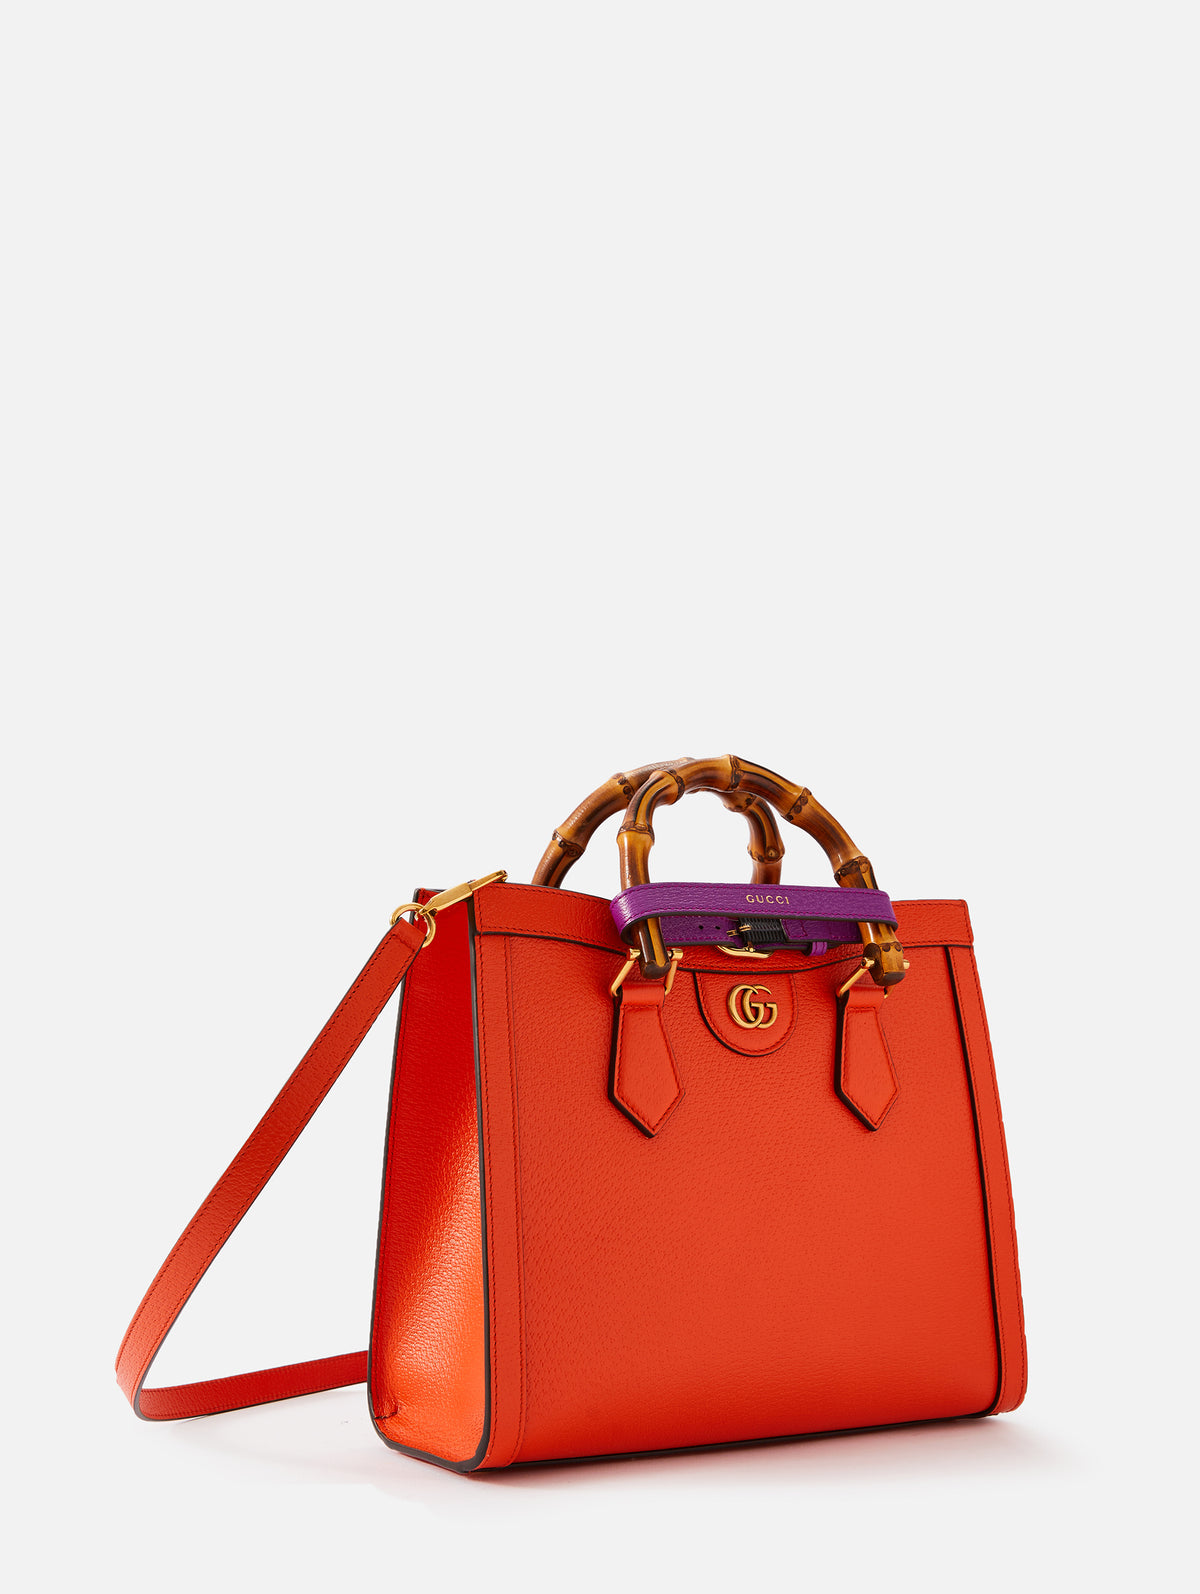 Gucci Diana mini GG crystal tote bag in orange